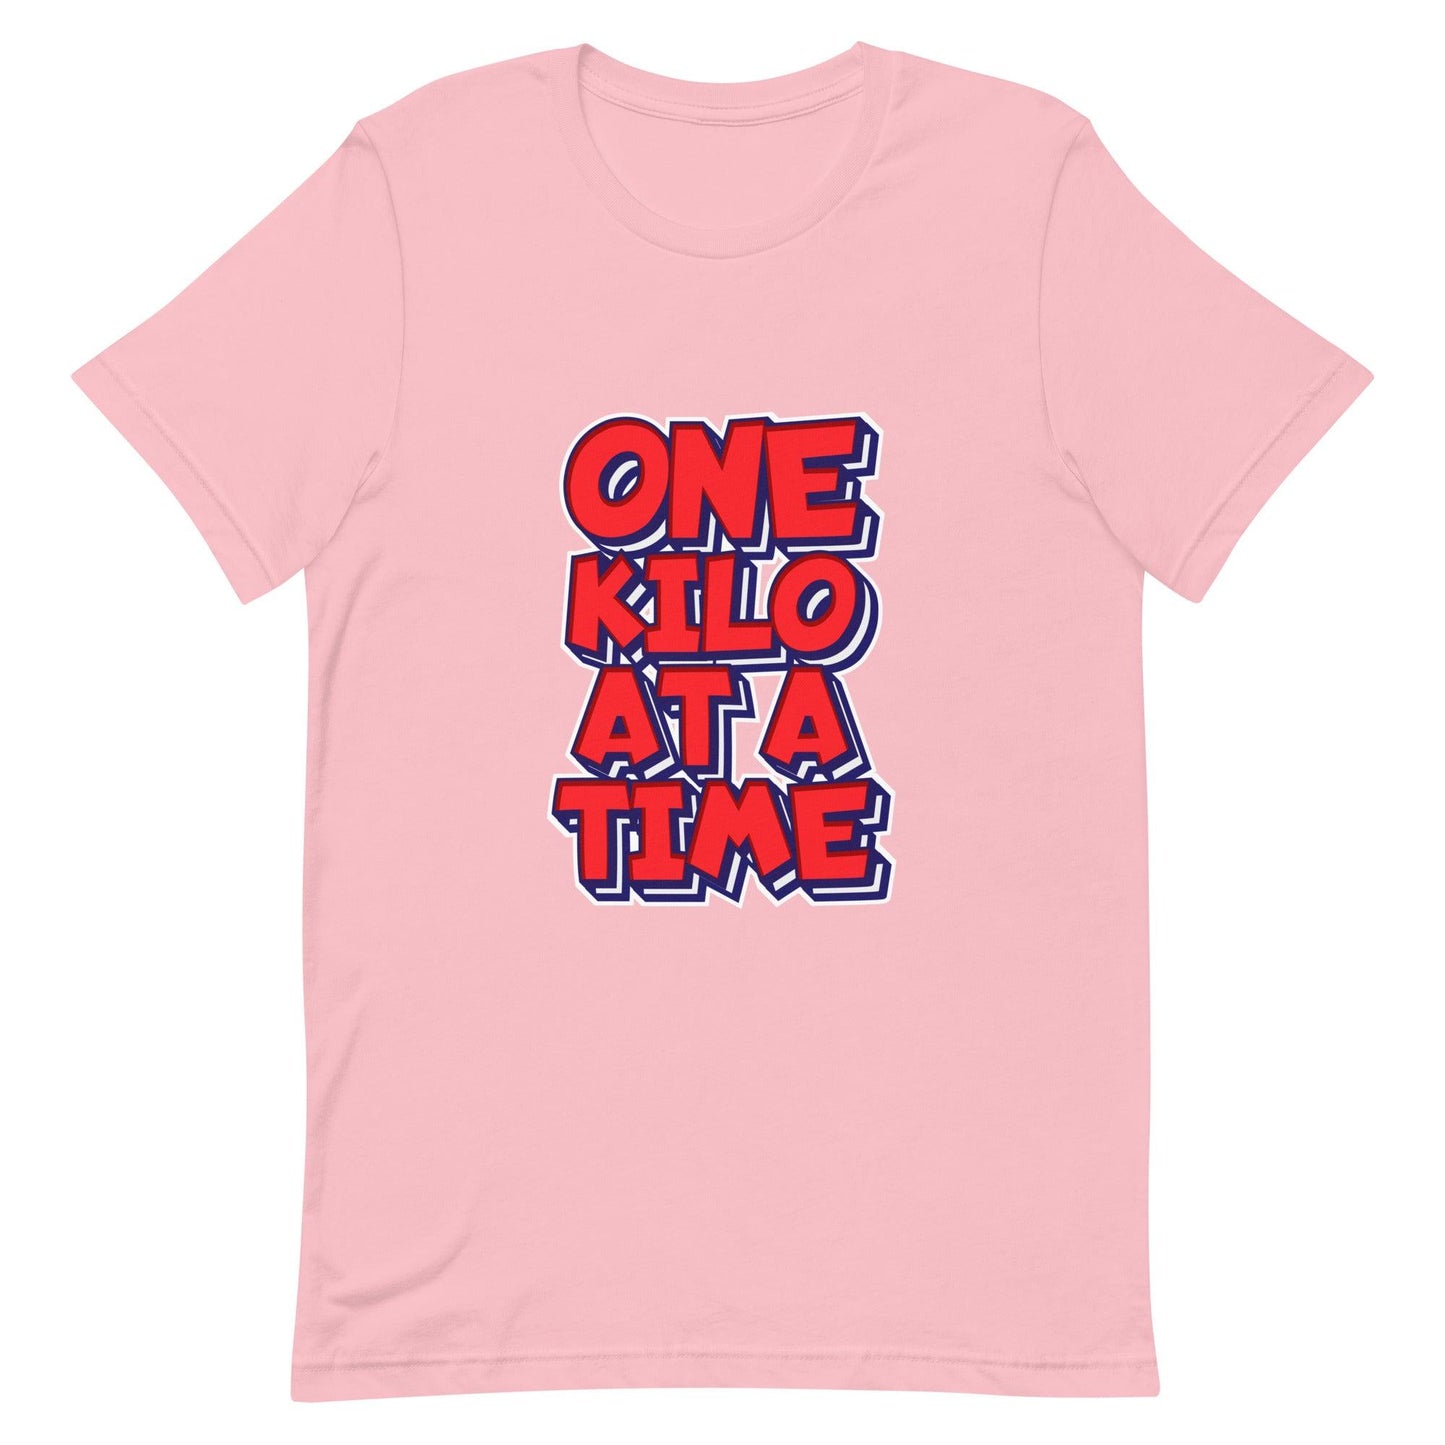 CJ Cummings “Essential” t-shirt - Fan Arch